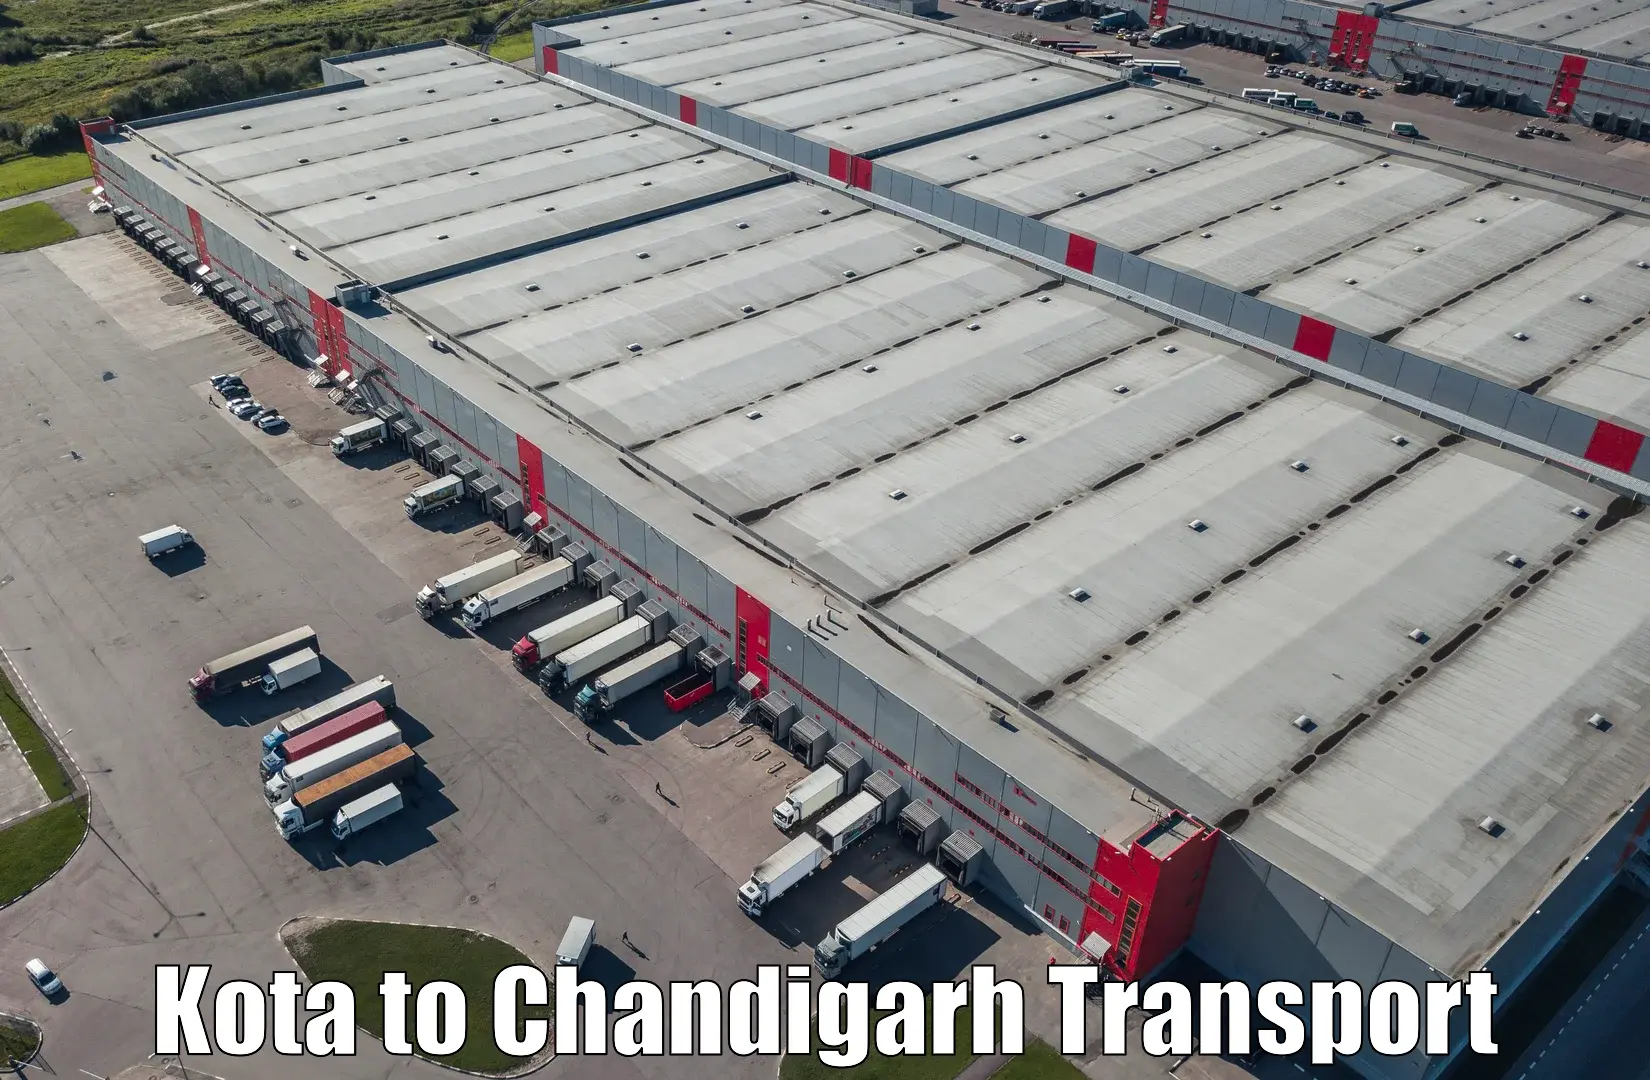 Shipping partner Kota to Chandigarh